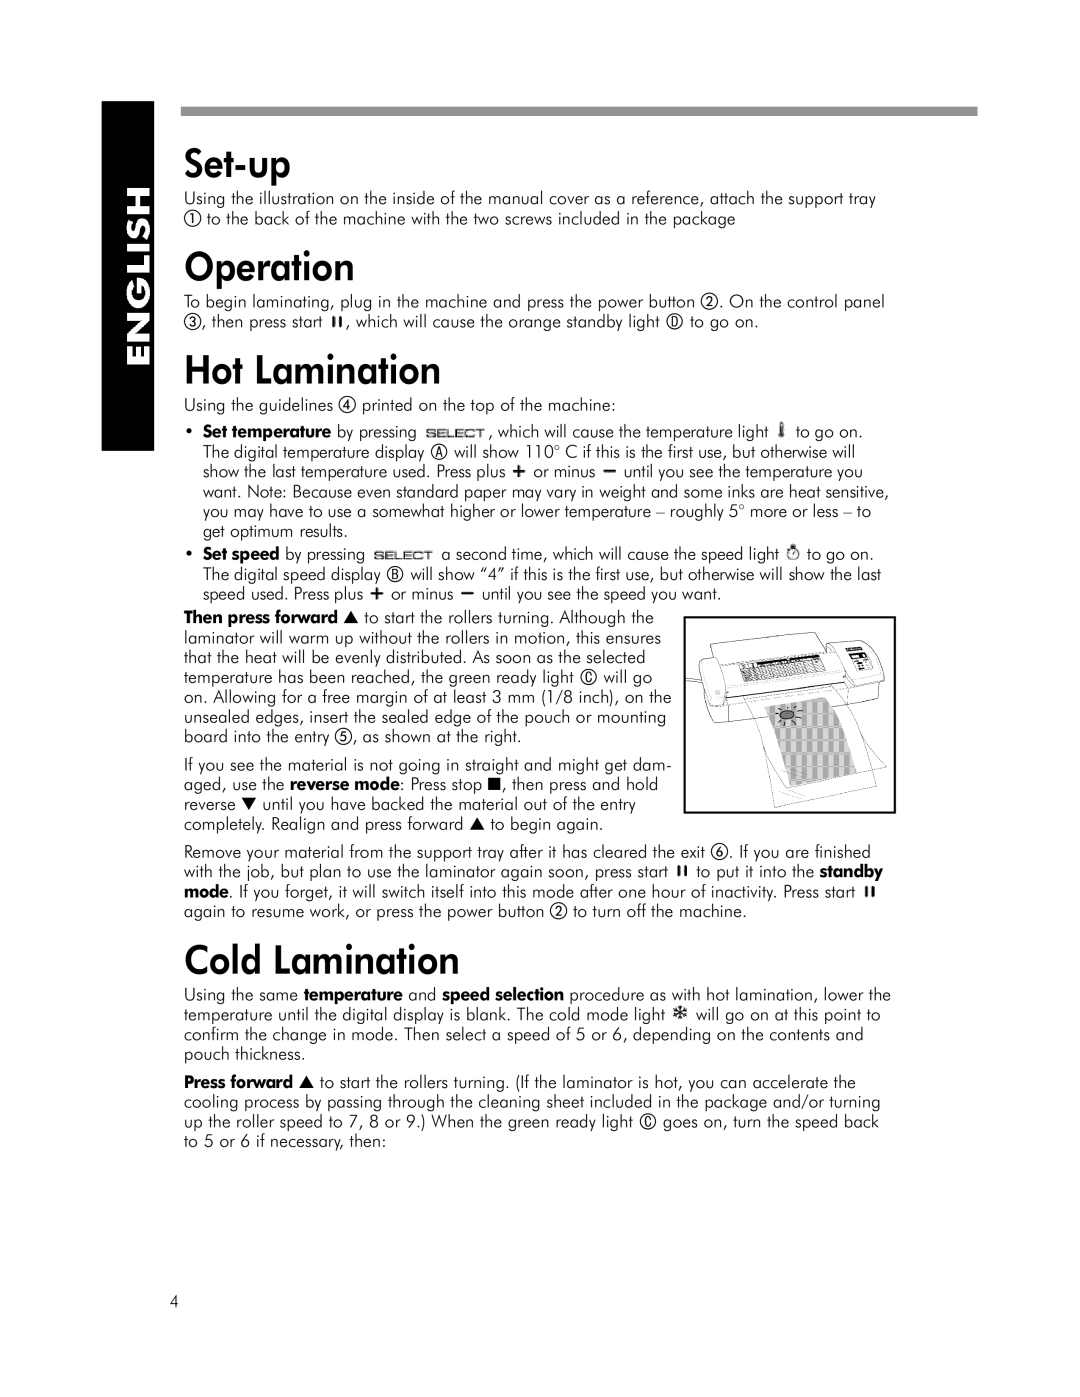 Fellowes SPL 95, SPL 125 manual Set- up, Operation, Hot Lamination, Cold Lamination, Set temperature by pressing 